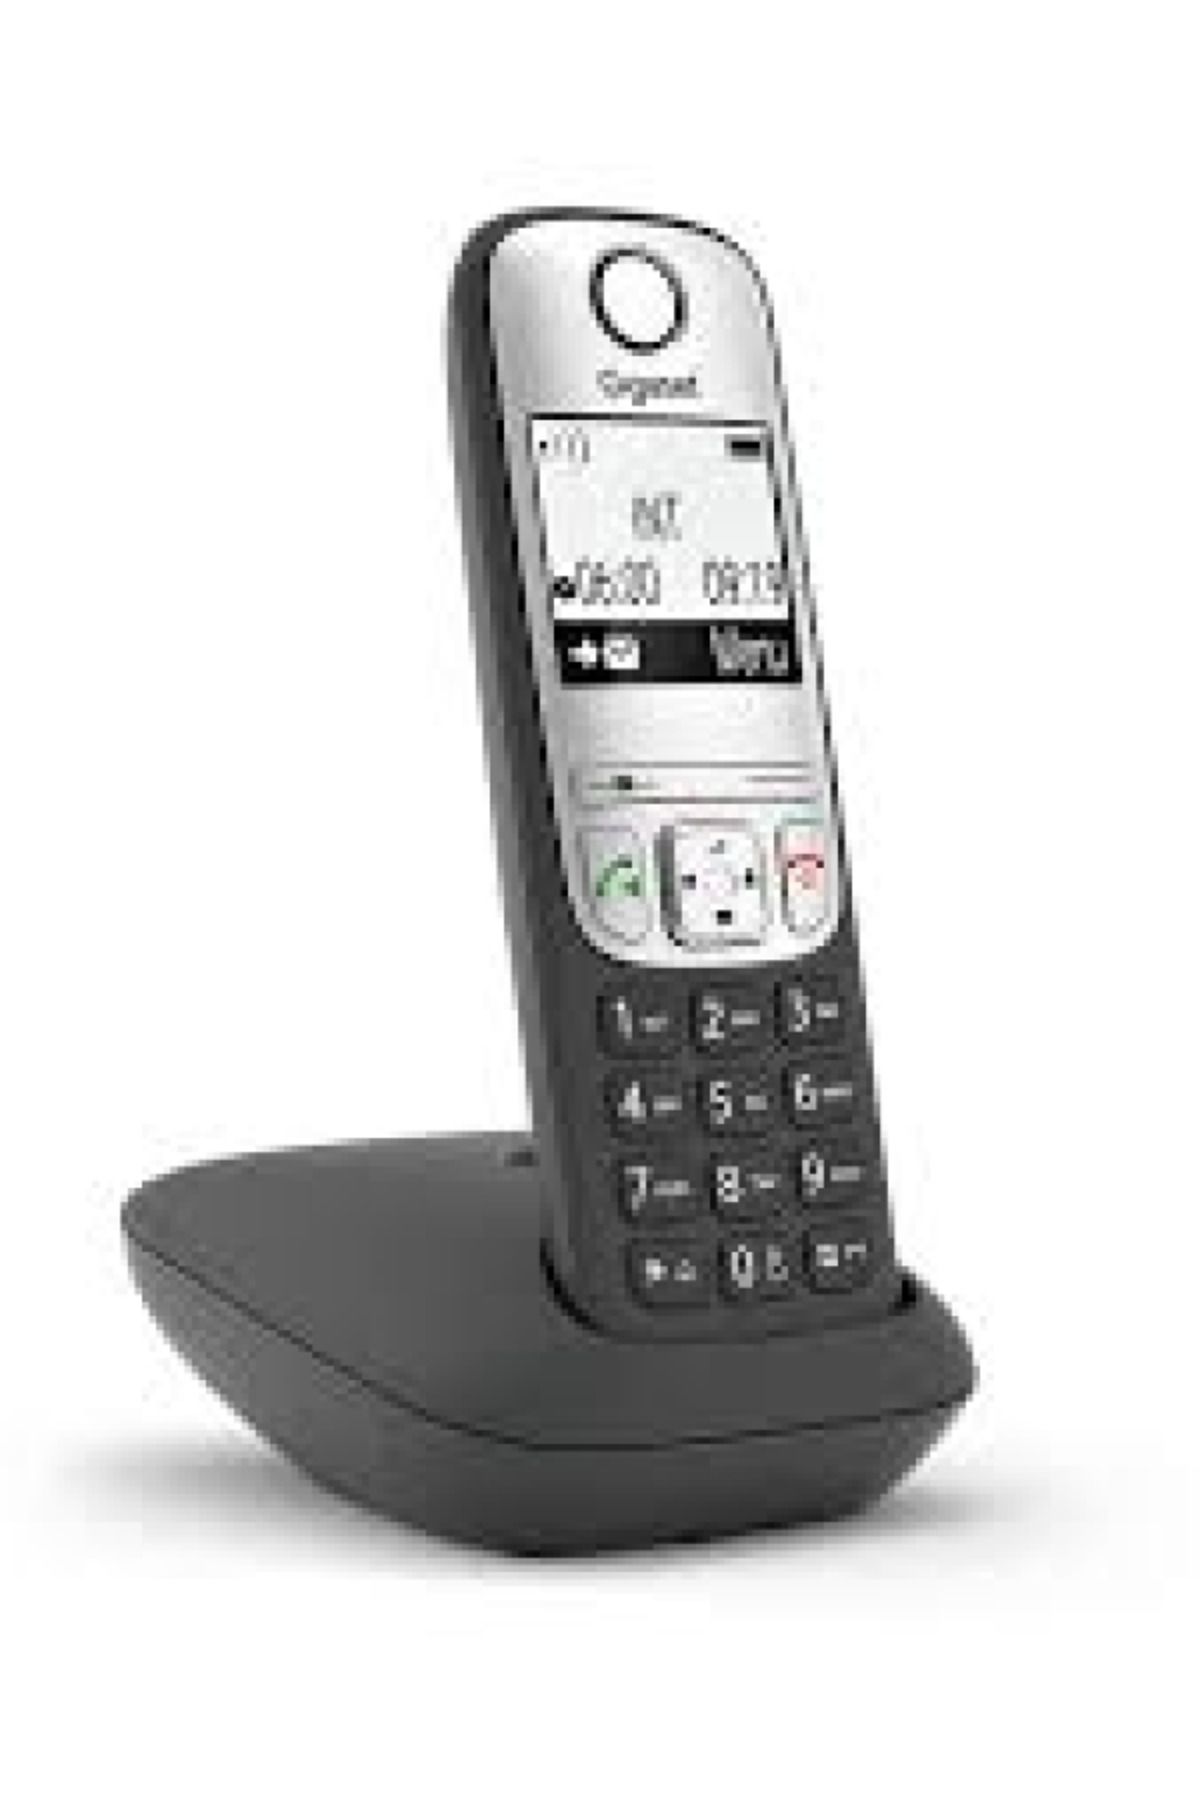 Gigaset A690 Beyaz Handsfree Dect Telsiz Telefon